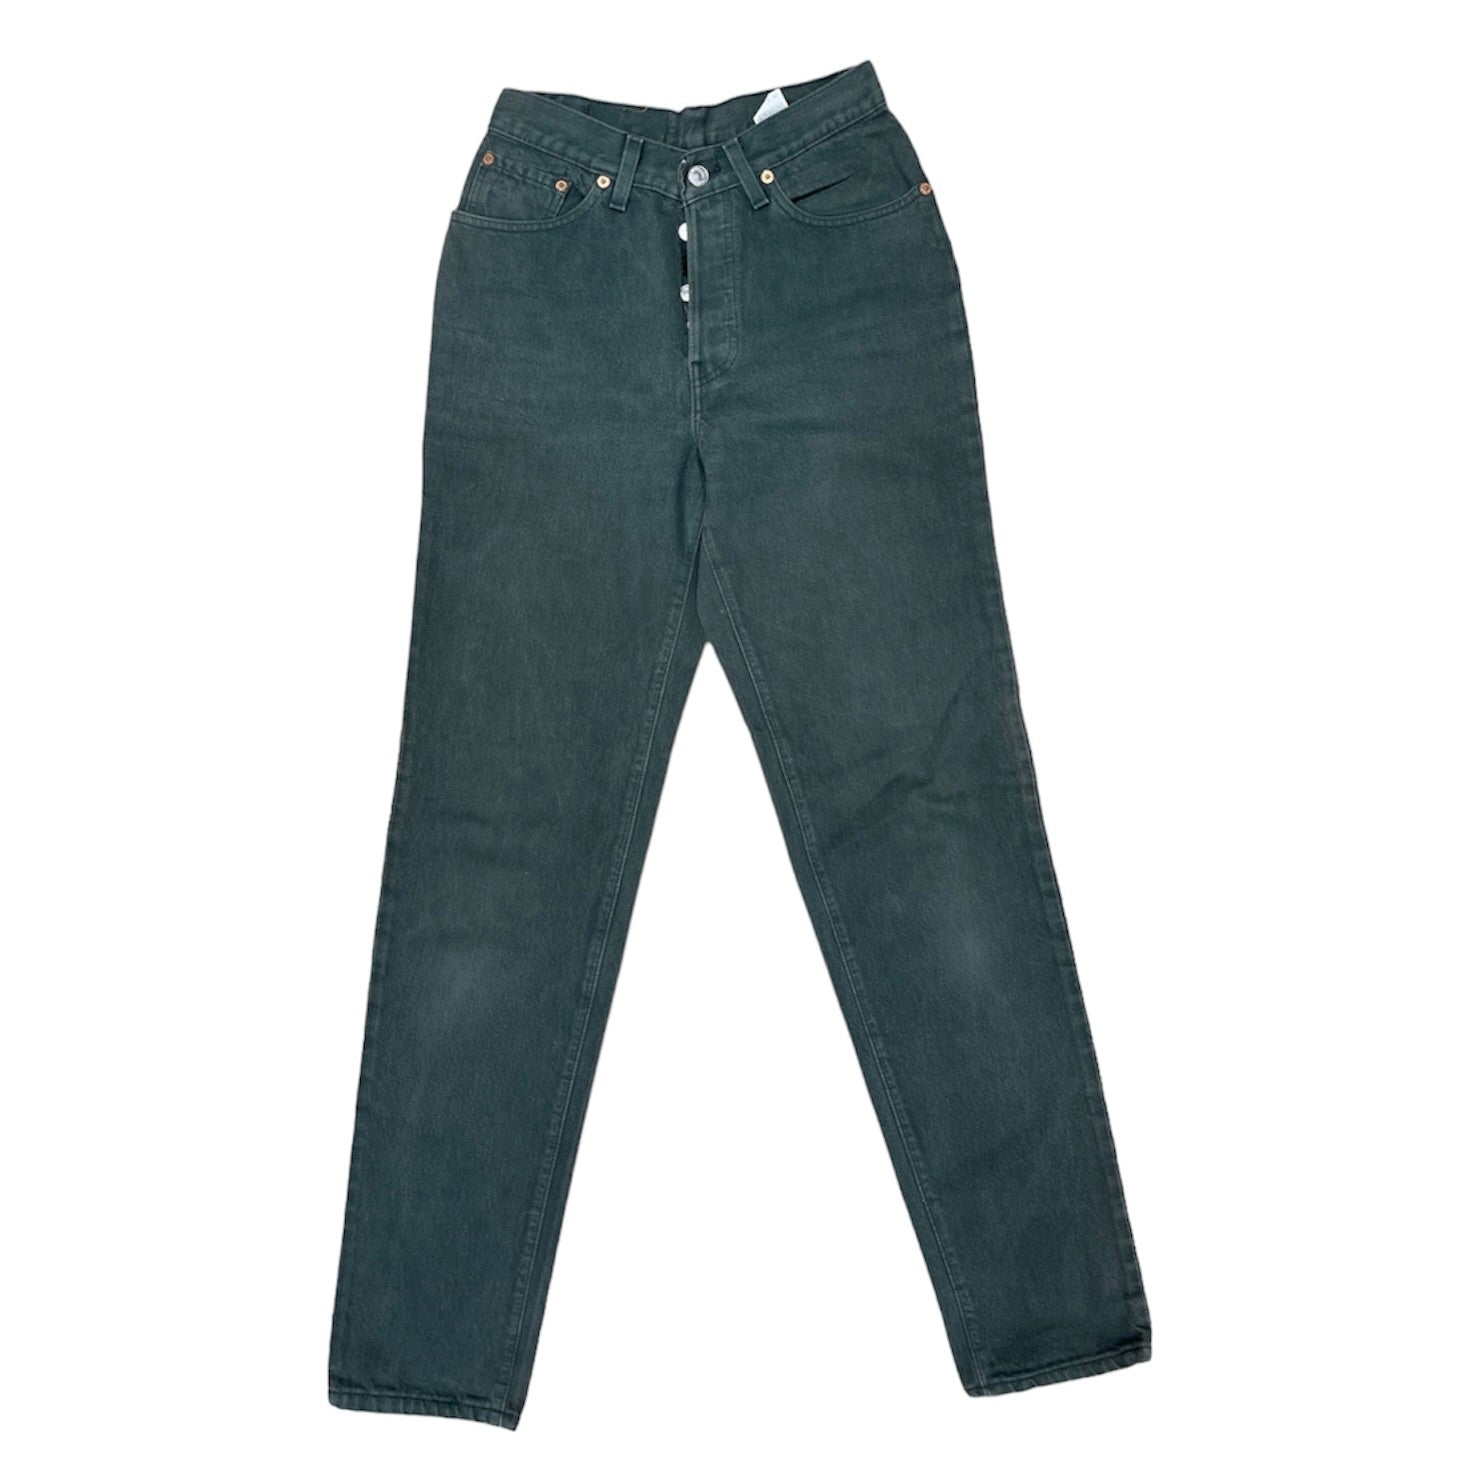 Vintage Levis 501 Green Jeans (W27)